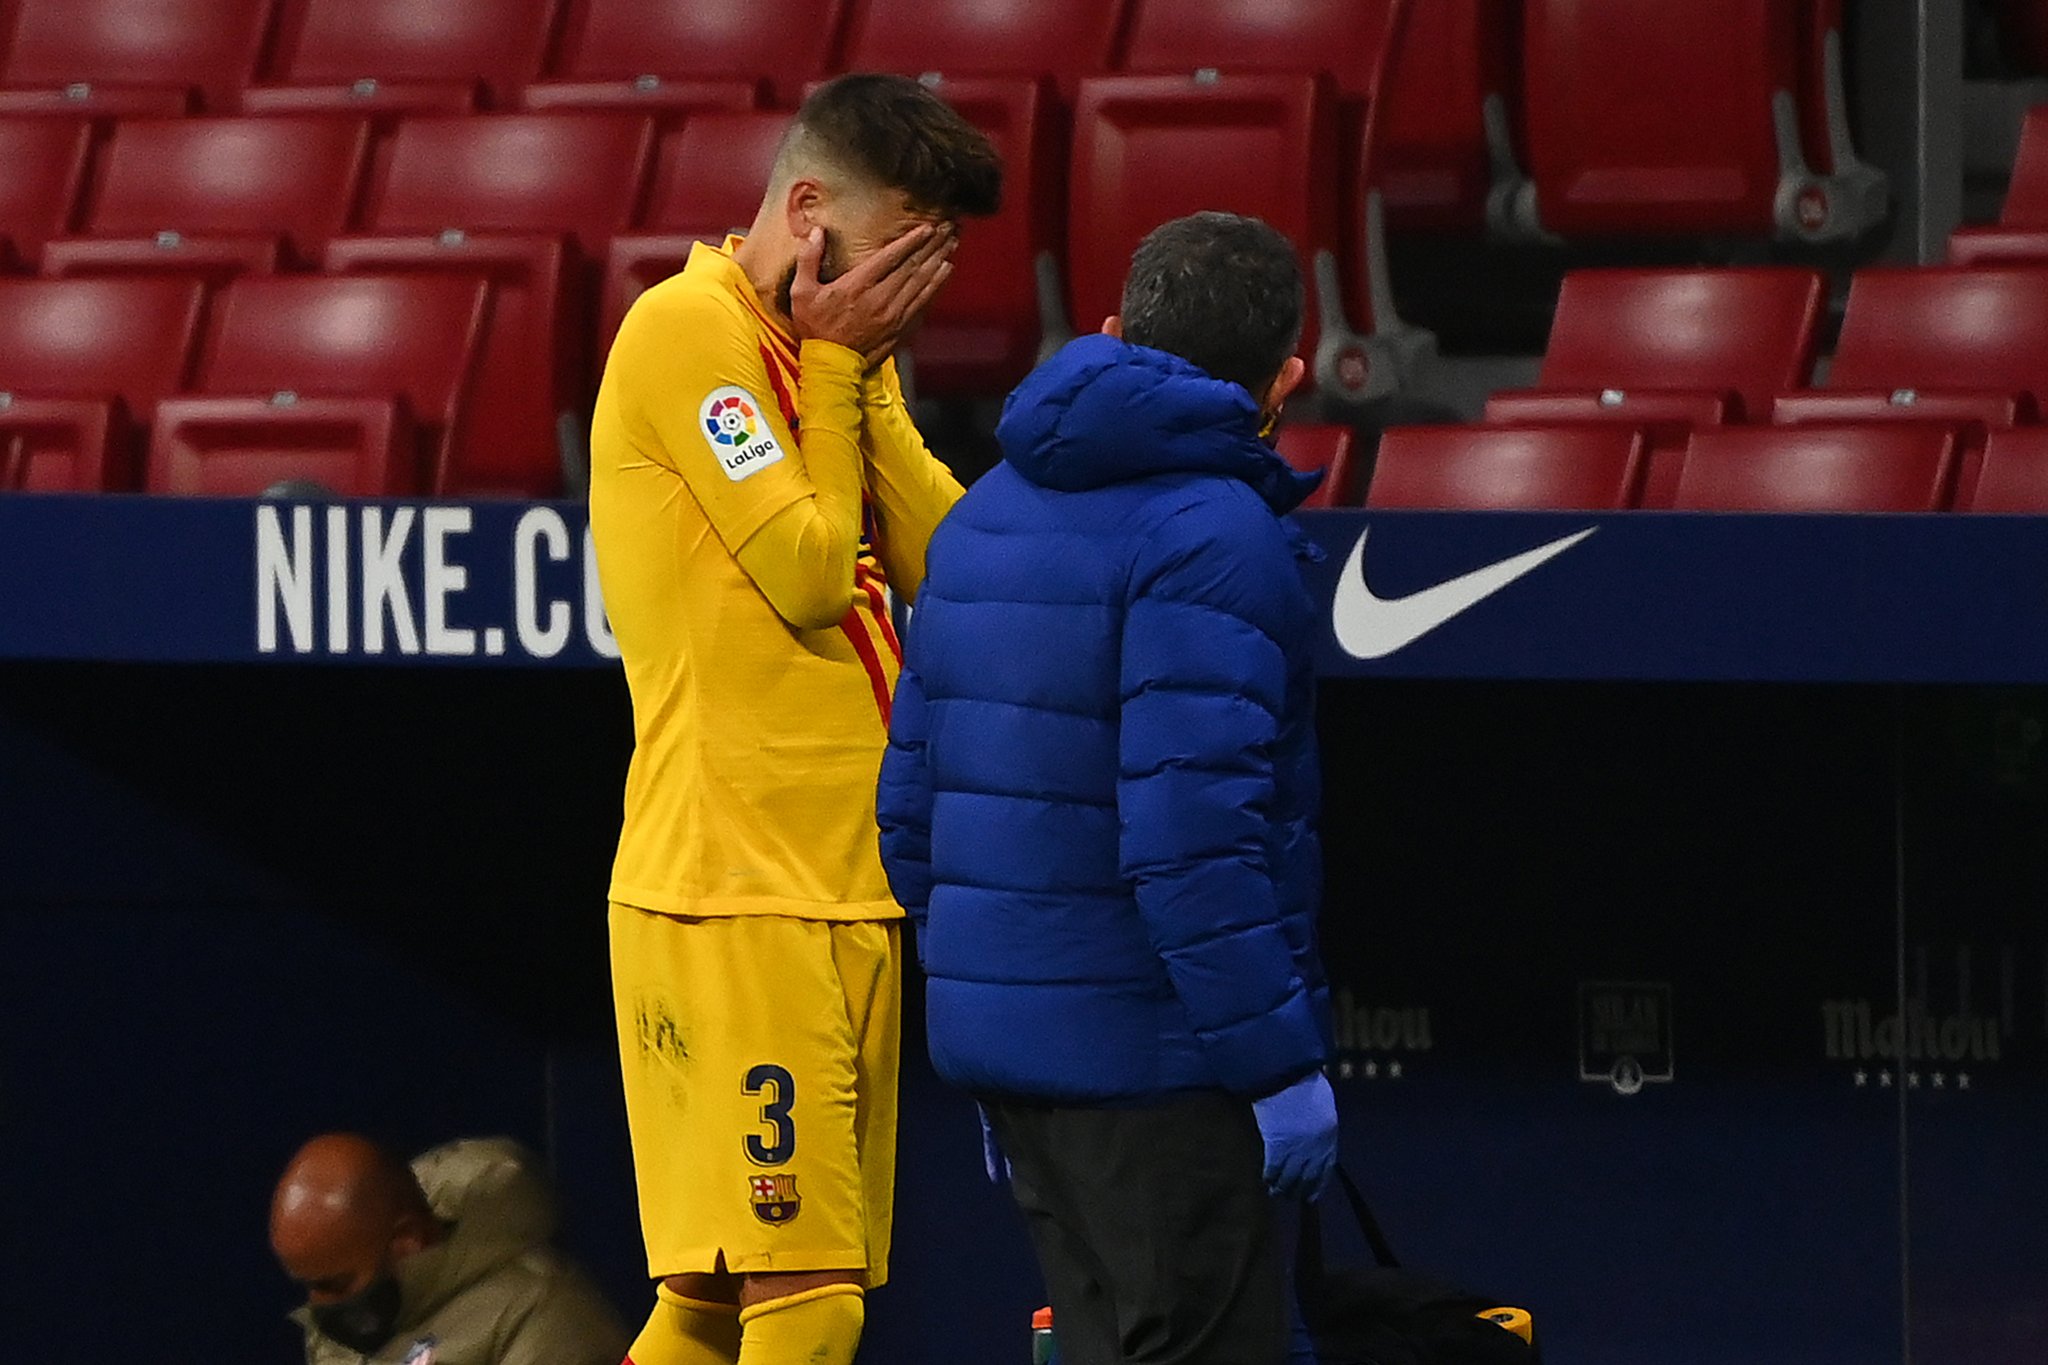 Barcelona offer injury updates on Gerard Pique and Sergi Roberto